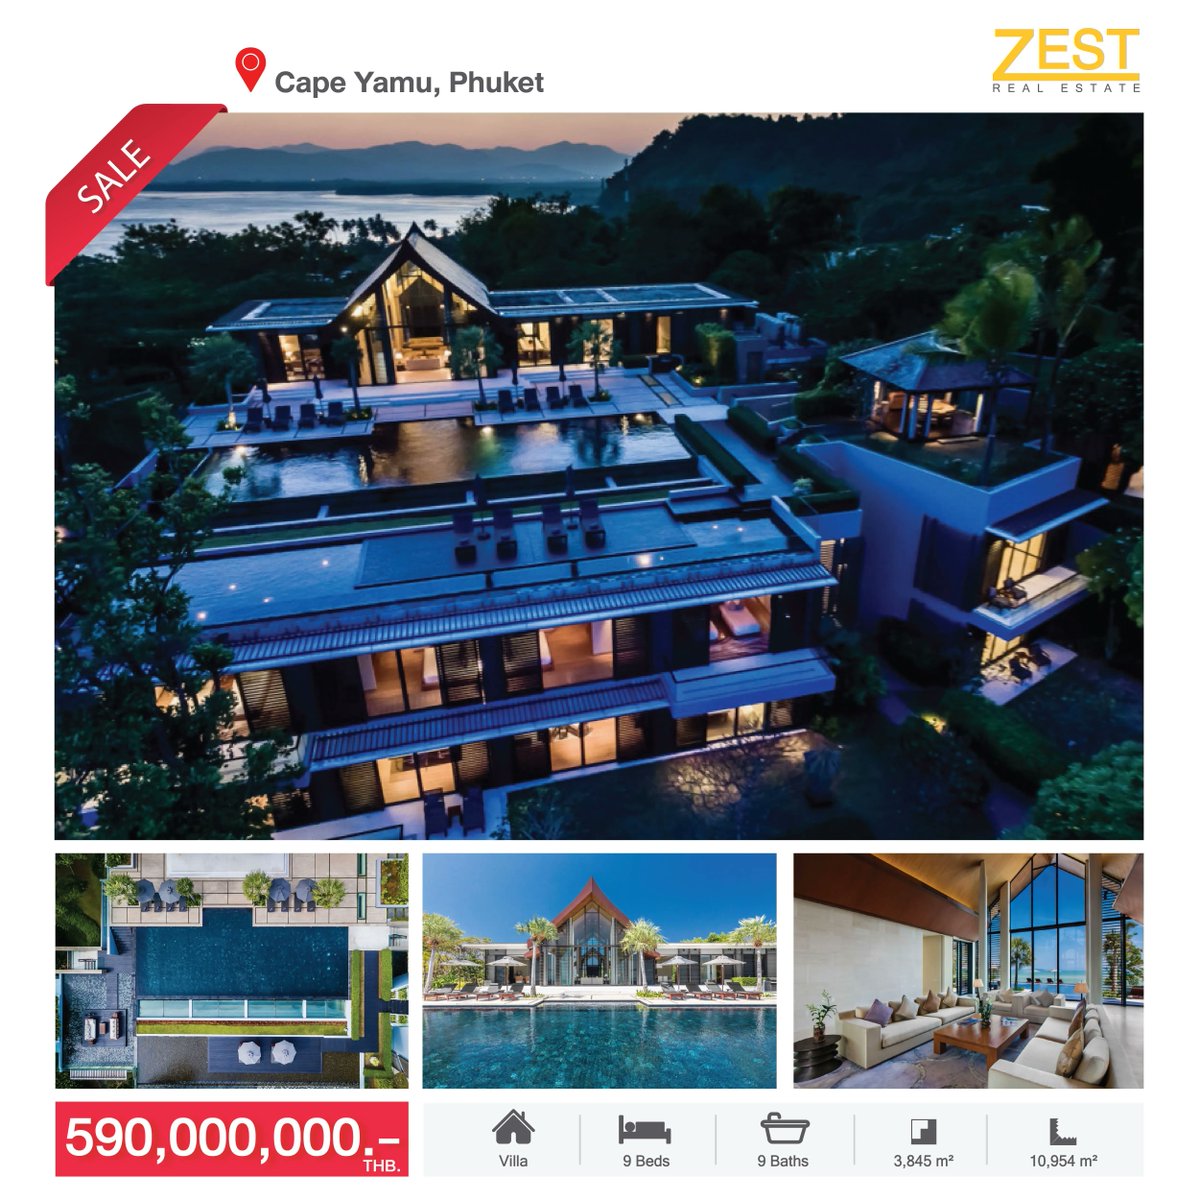 Villa for sale in Cape yamu, Phuket
9 Beds/ 9 Baths/ 3,845 sqm.

590,000,000 THB.
buff.ly/3osJ36x 

#zestrealestate #zestphuket  #luxuryvillas  #PhuketVillas #villainphuket #villaforsale #PropertylnPhuket